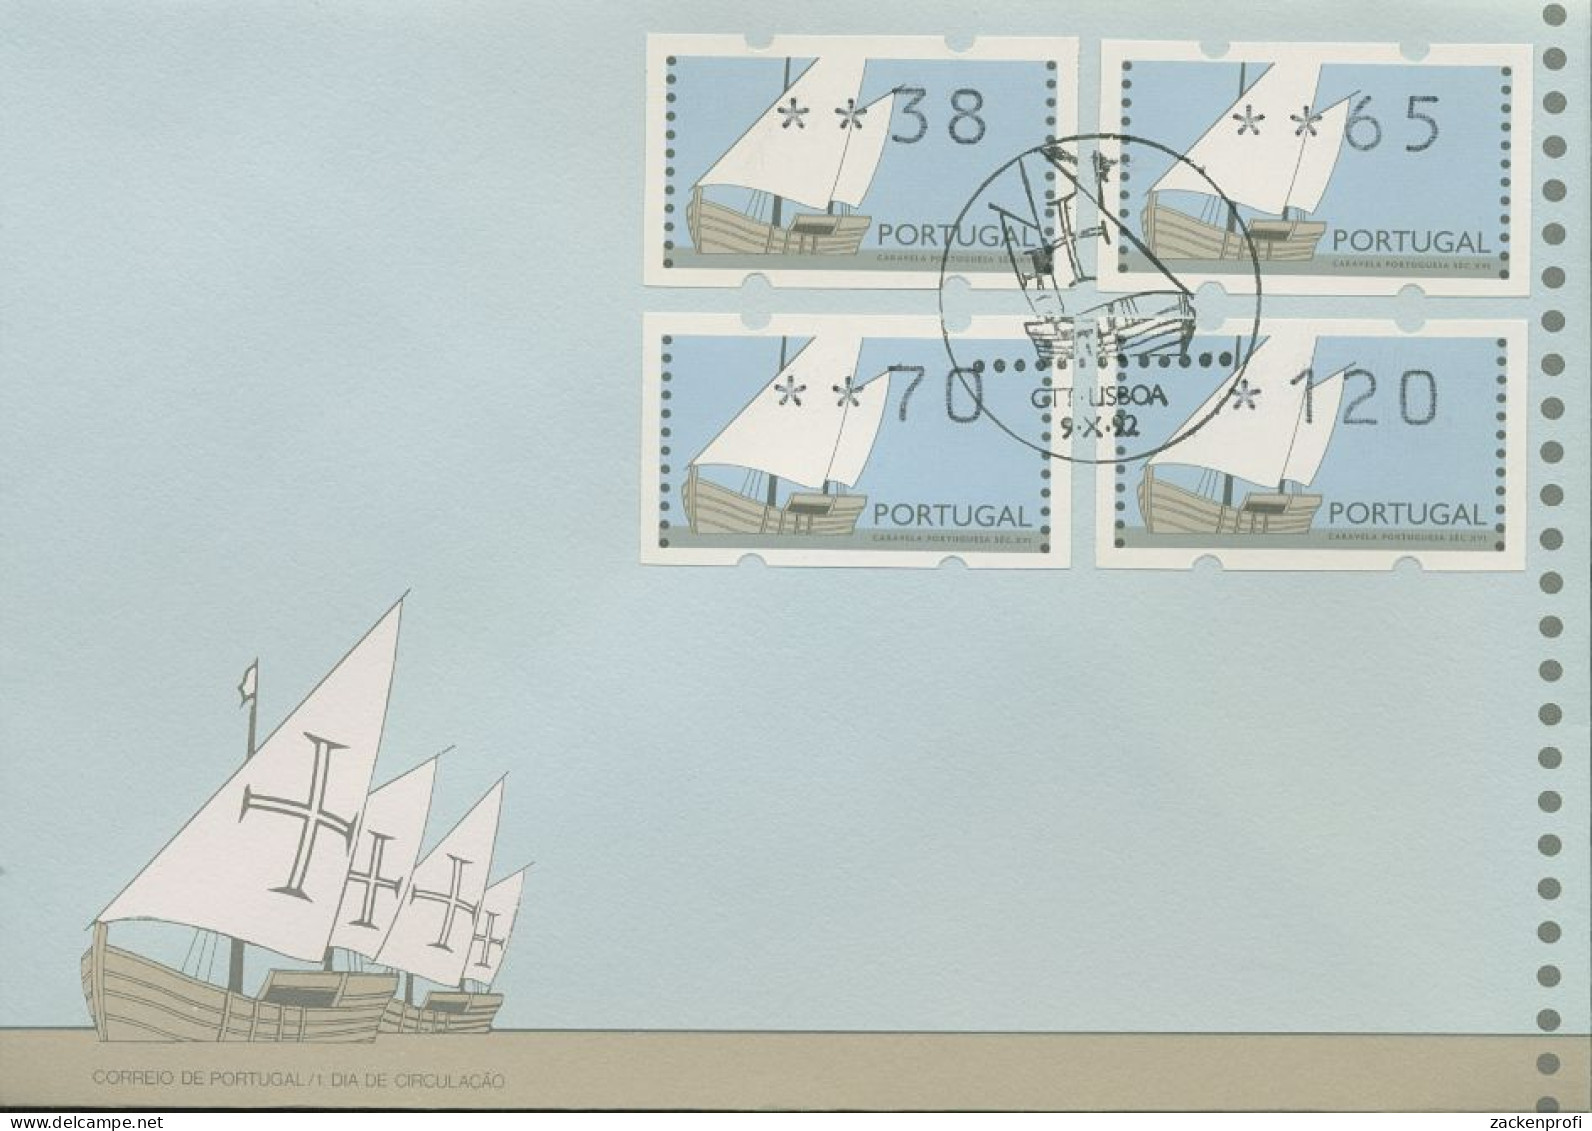 Portugal ATM 1992 Segelschiffe Satz 4 Werte 38/65/70/120 ATM 5 S1 FDC (X80359) - Machine Labels [ATM]